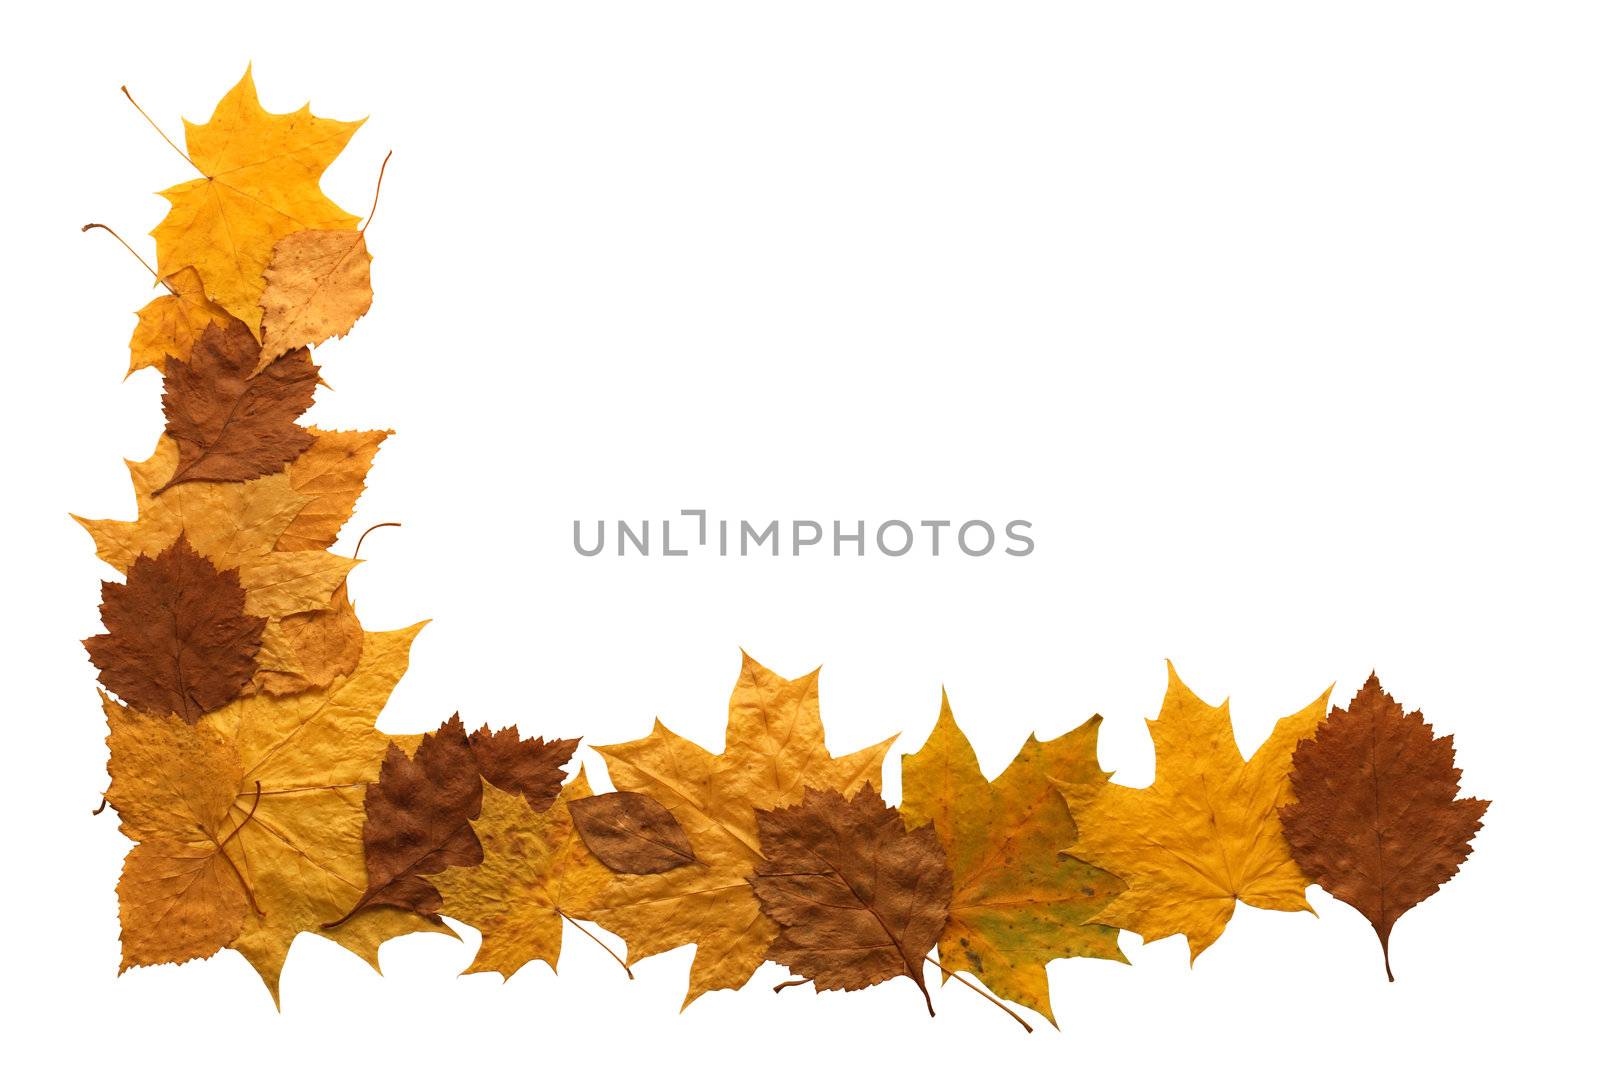 Autumn Leaves Border by kvkirillov